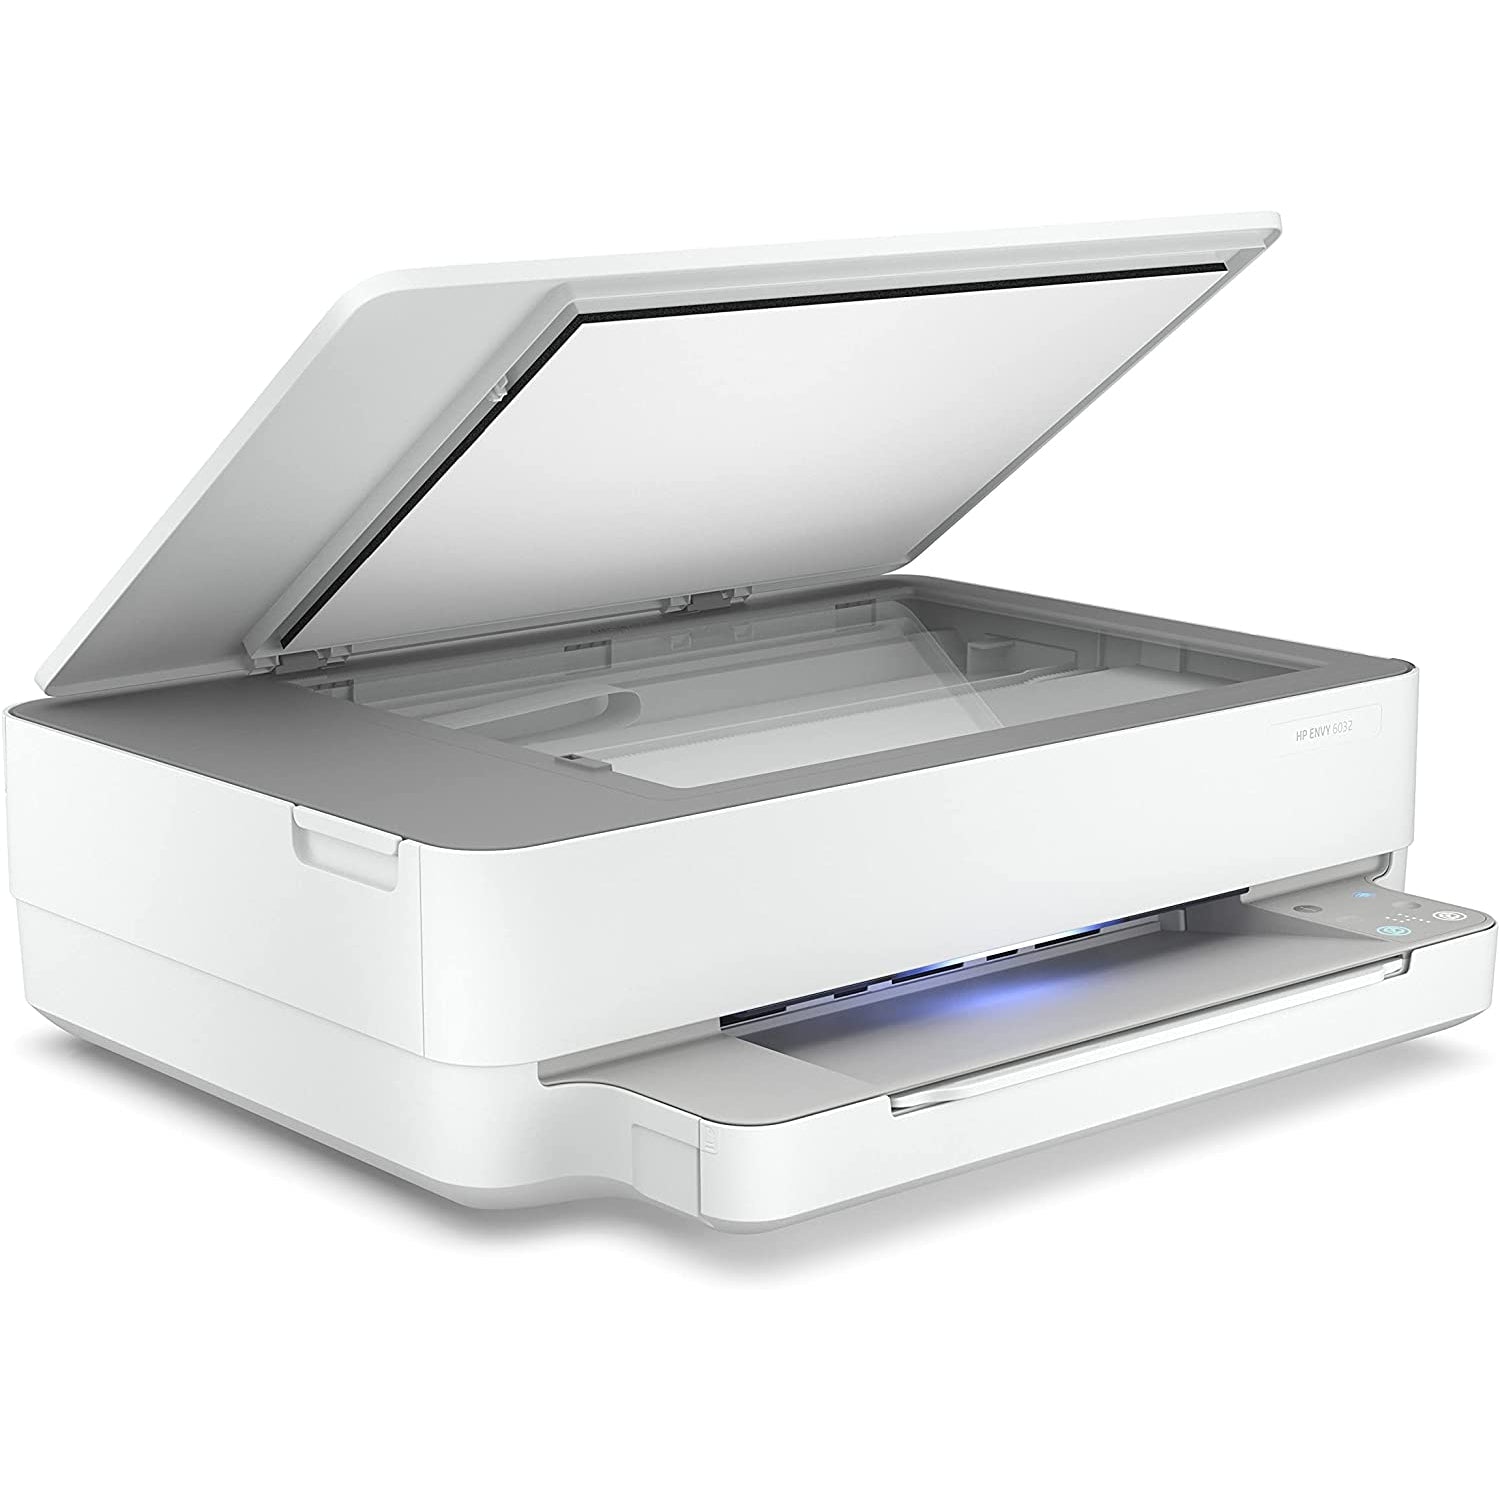 HP Envy 6032 All-in-One Wireless Inkjet Printer, White - Refurbished Pristine